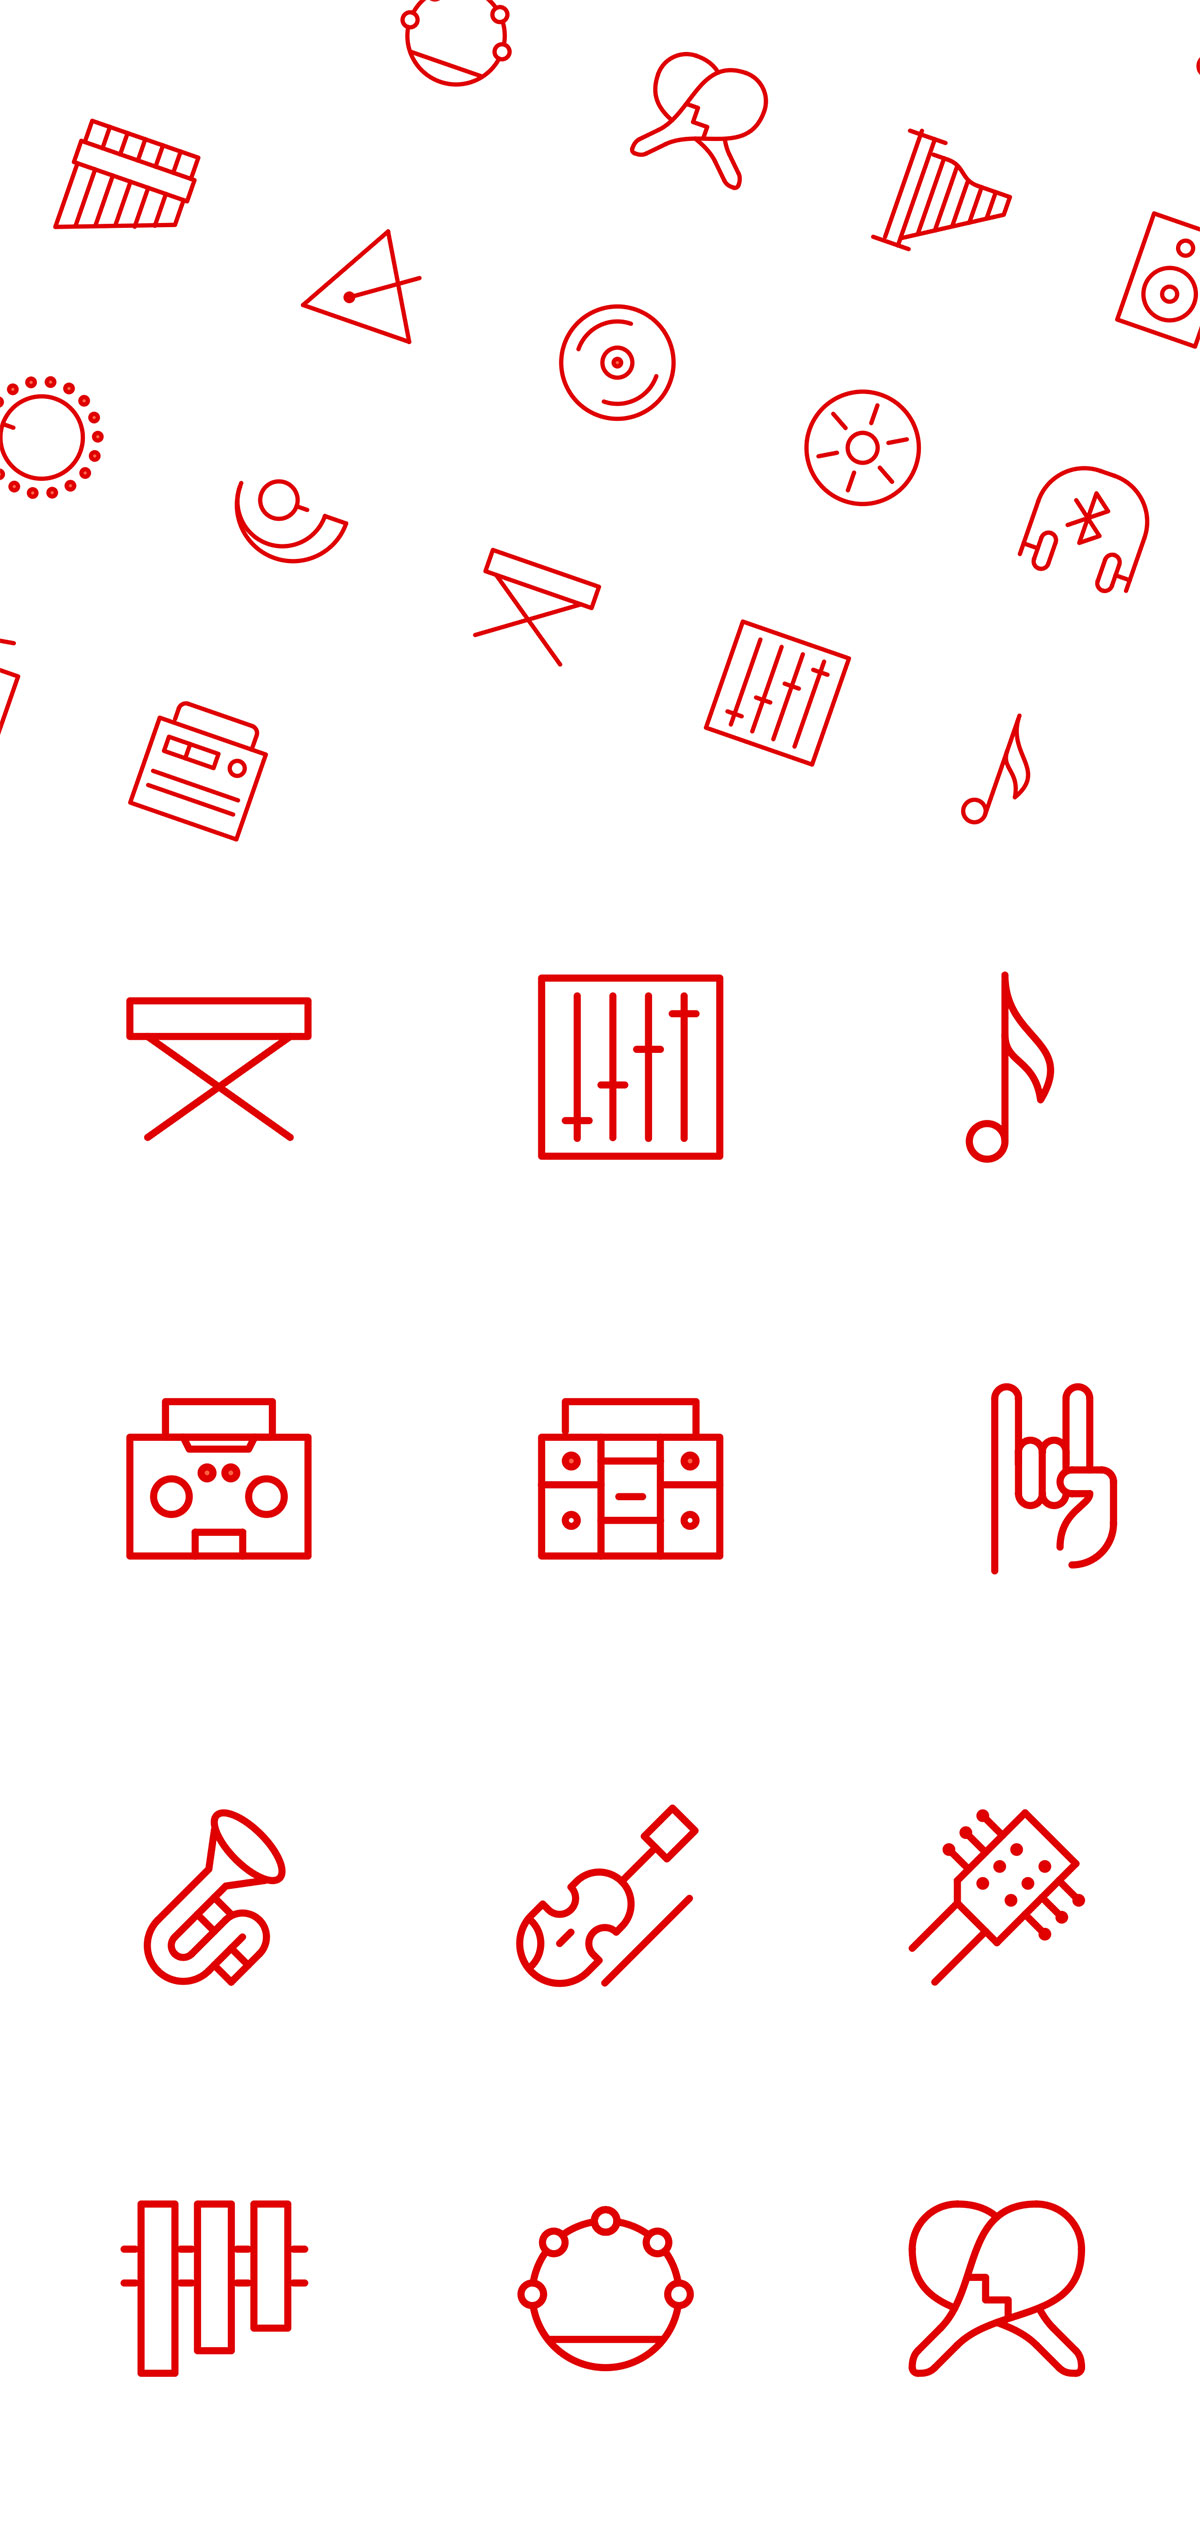 Free Music Line Icons